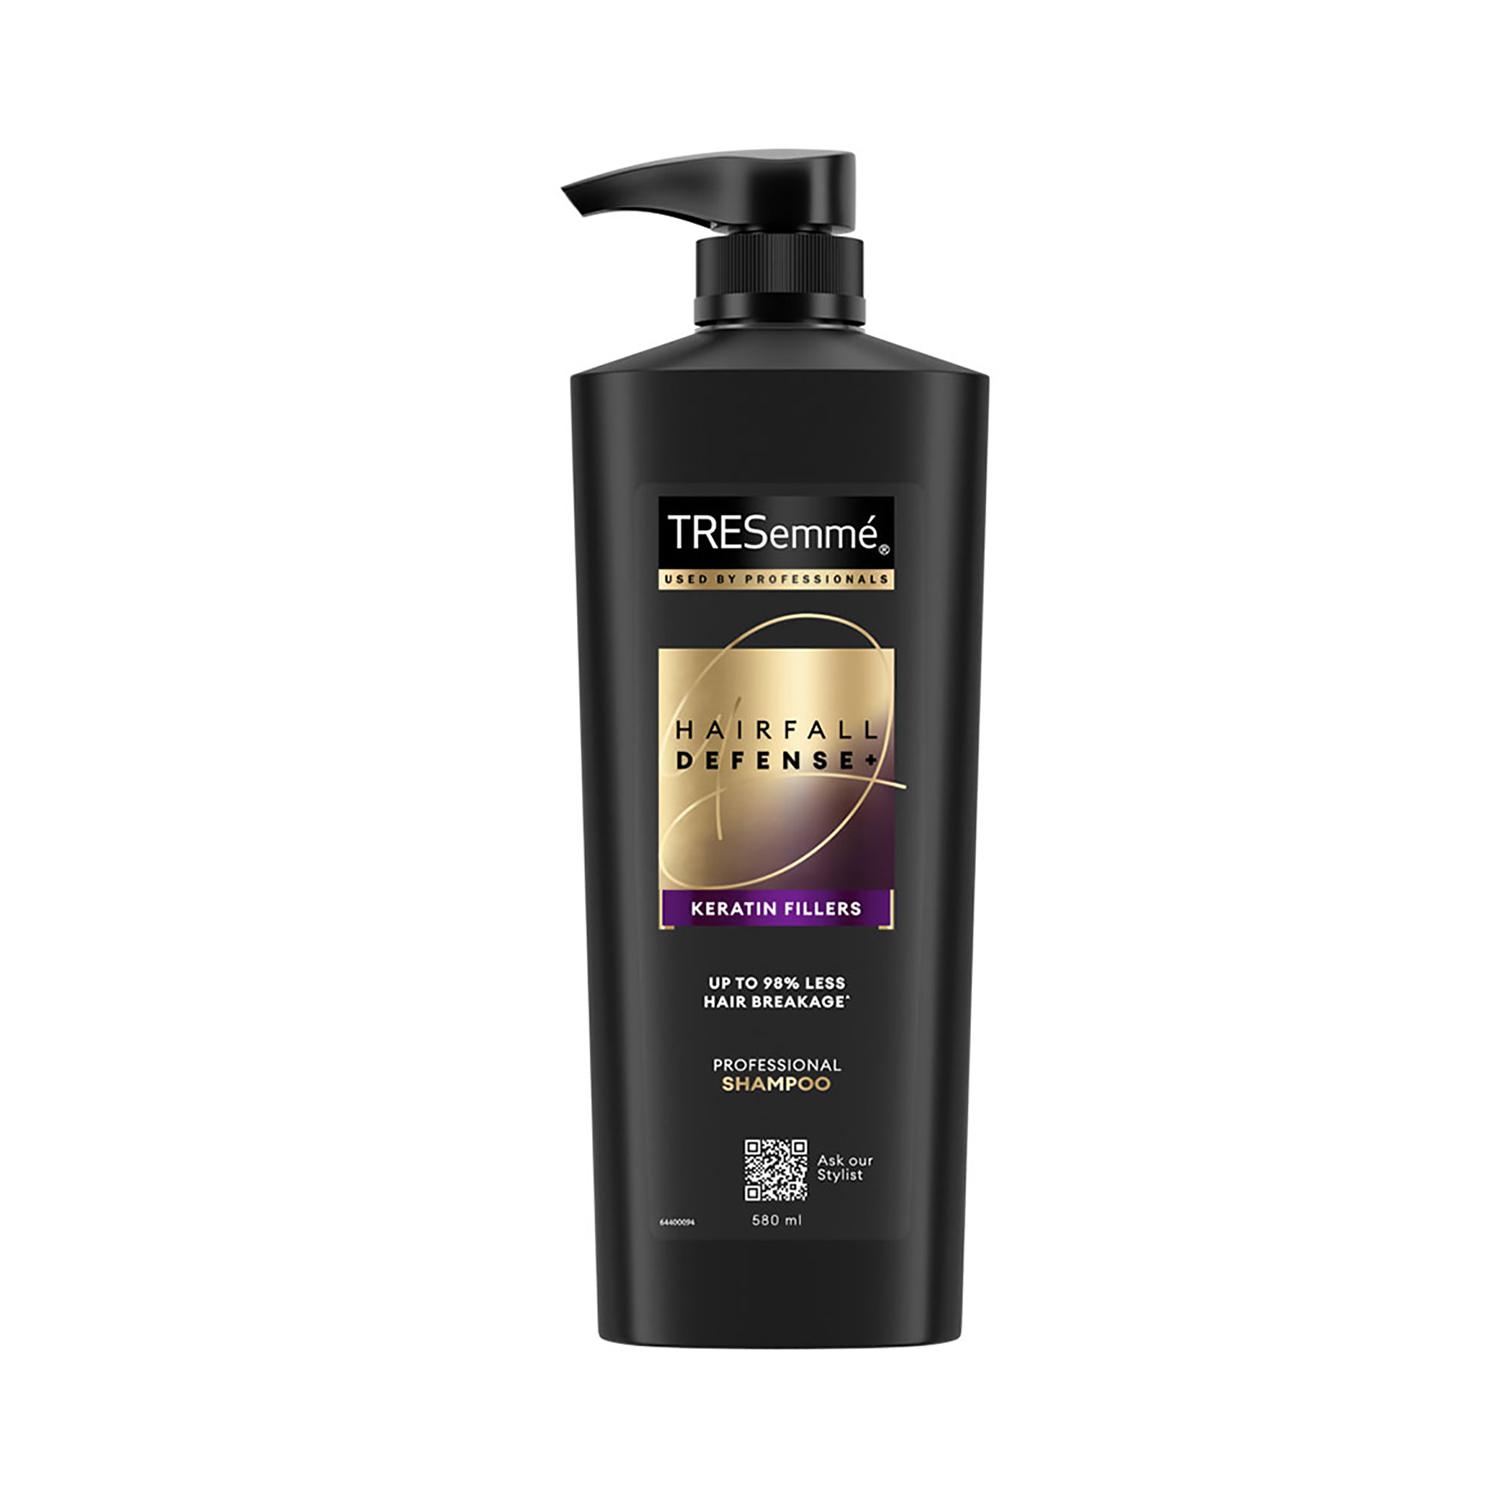 Tresemme | TRESemme Hairfall Defense+ Shampoo (580 ml)